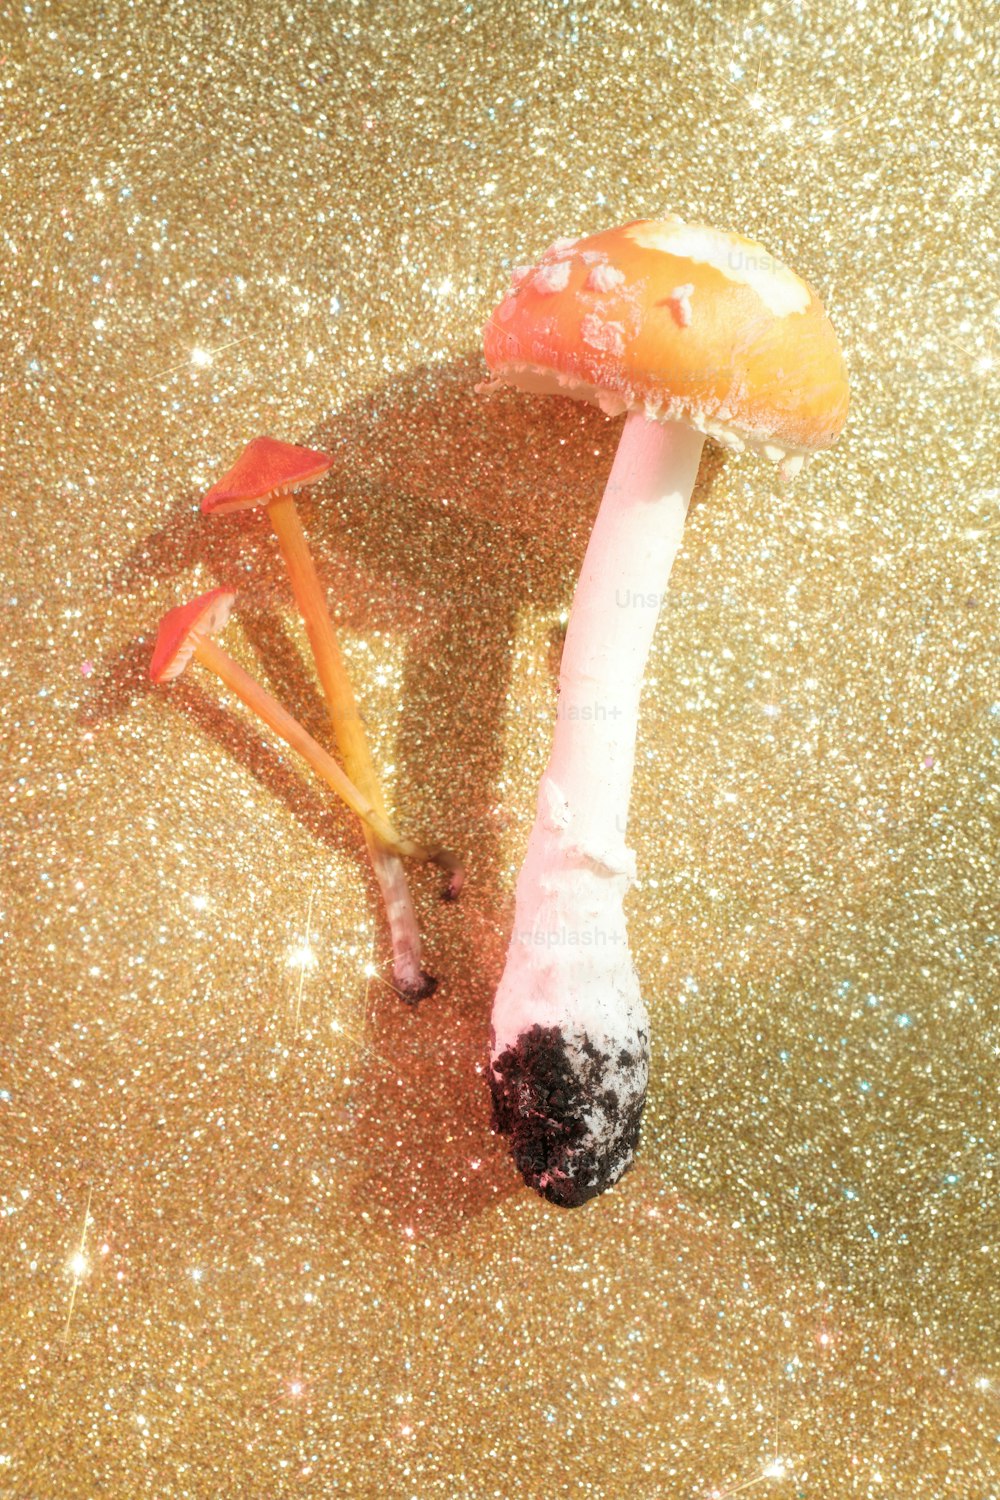 a close up of a mushroom on a glittery surface